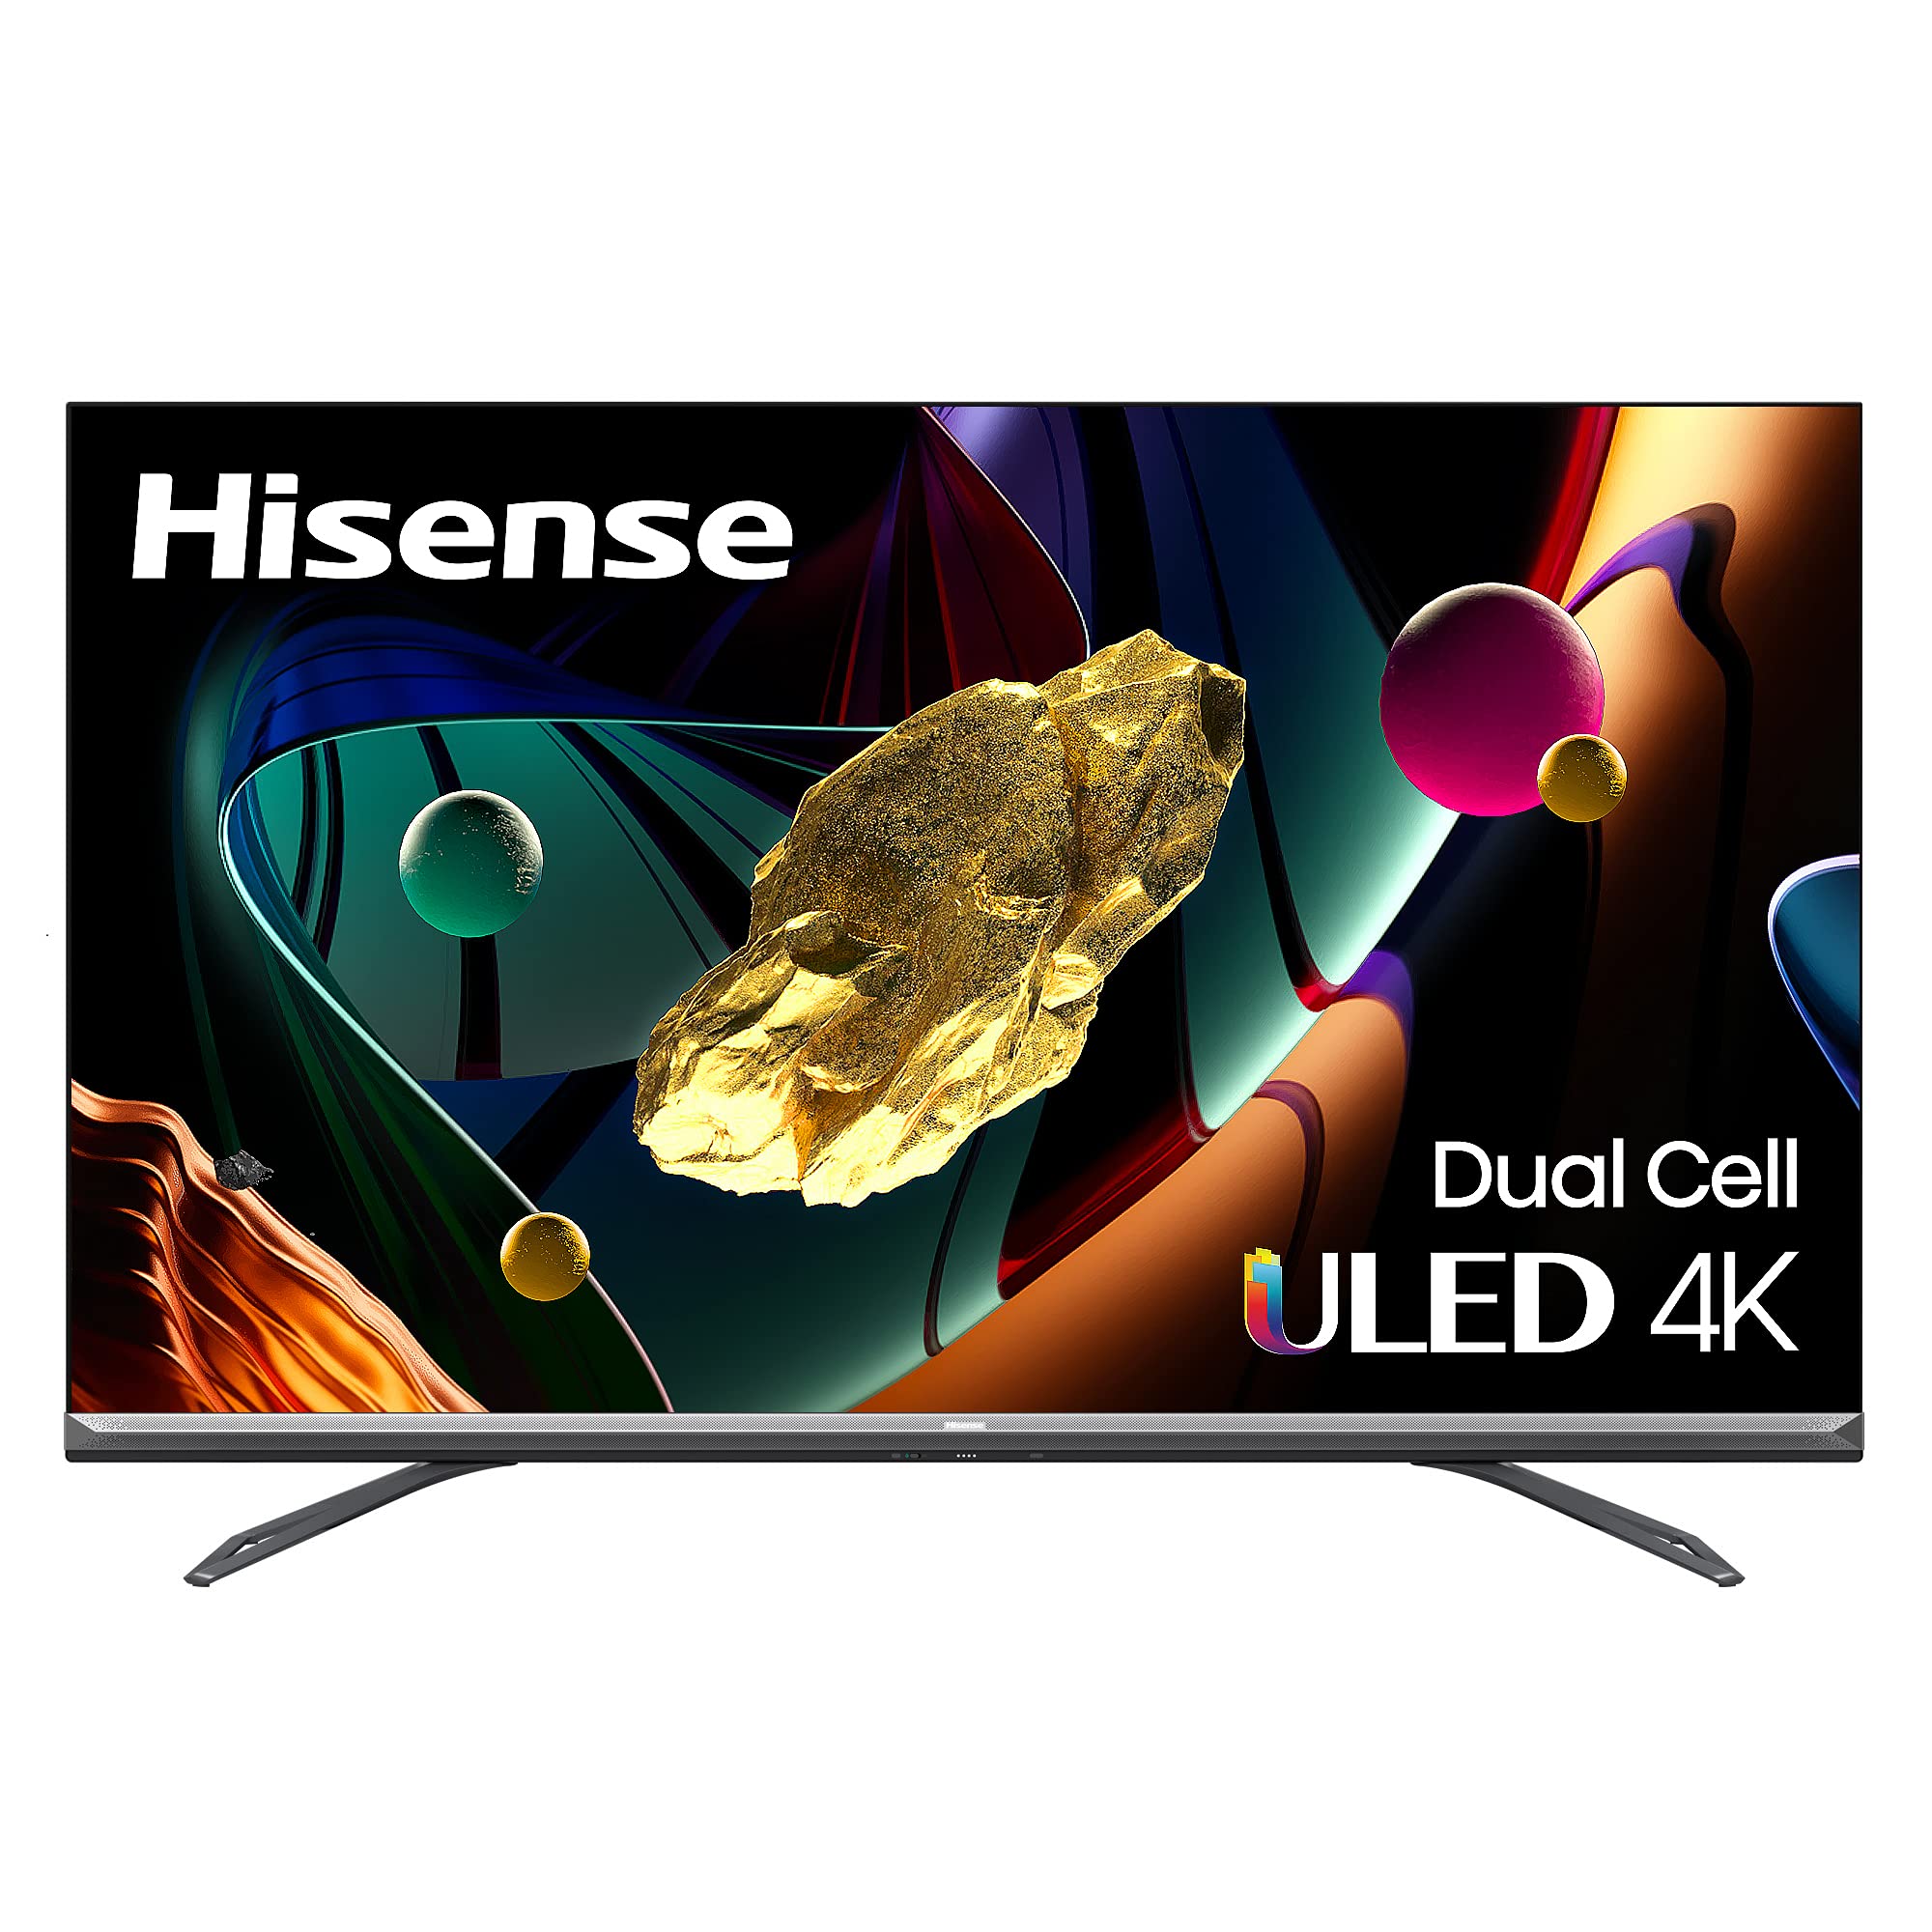 Hisense 75U9DG ULED Dual-Cell tv  $1999.99 at Amazon